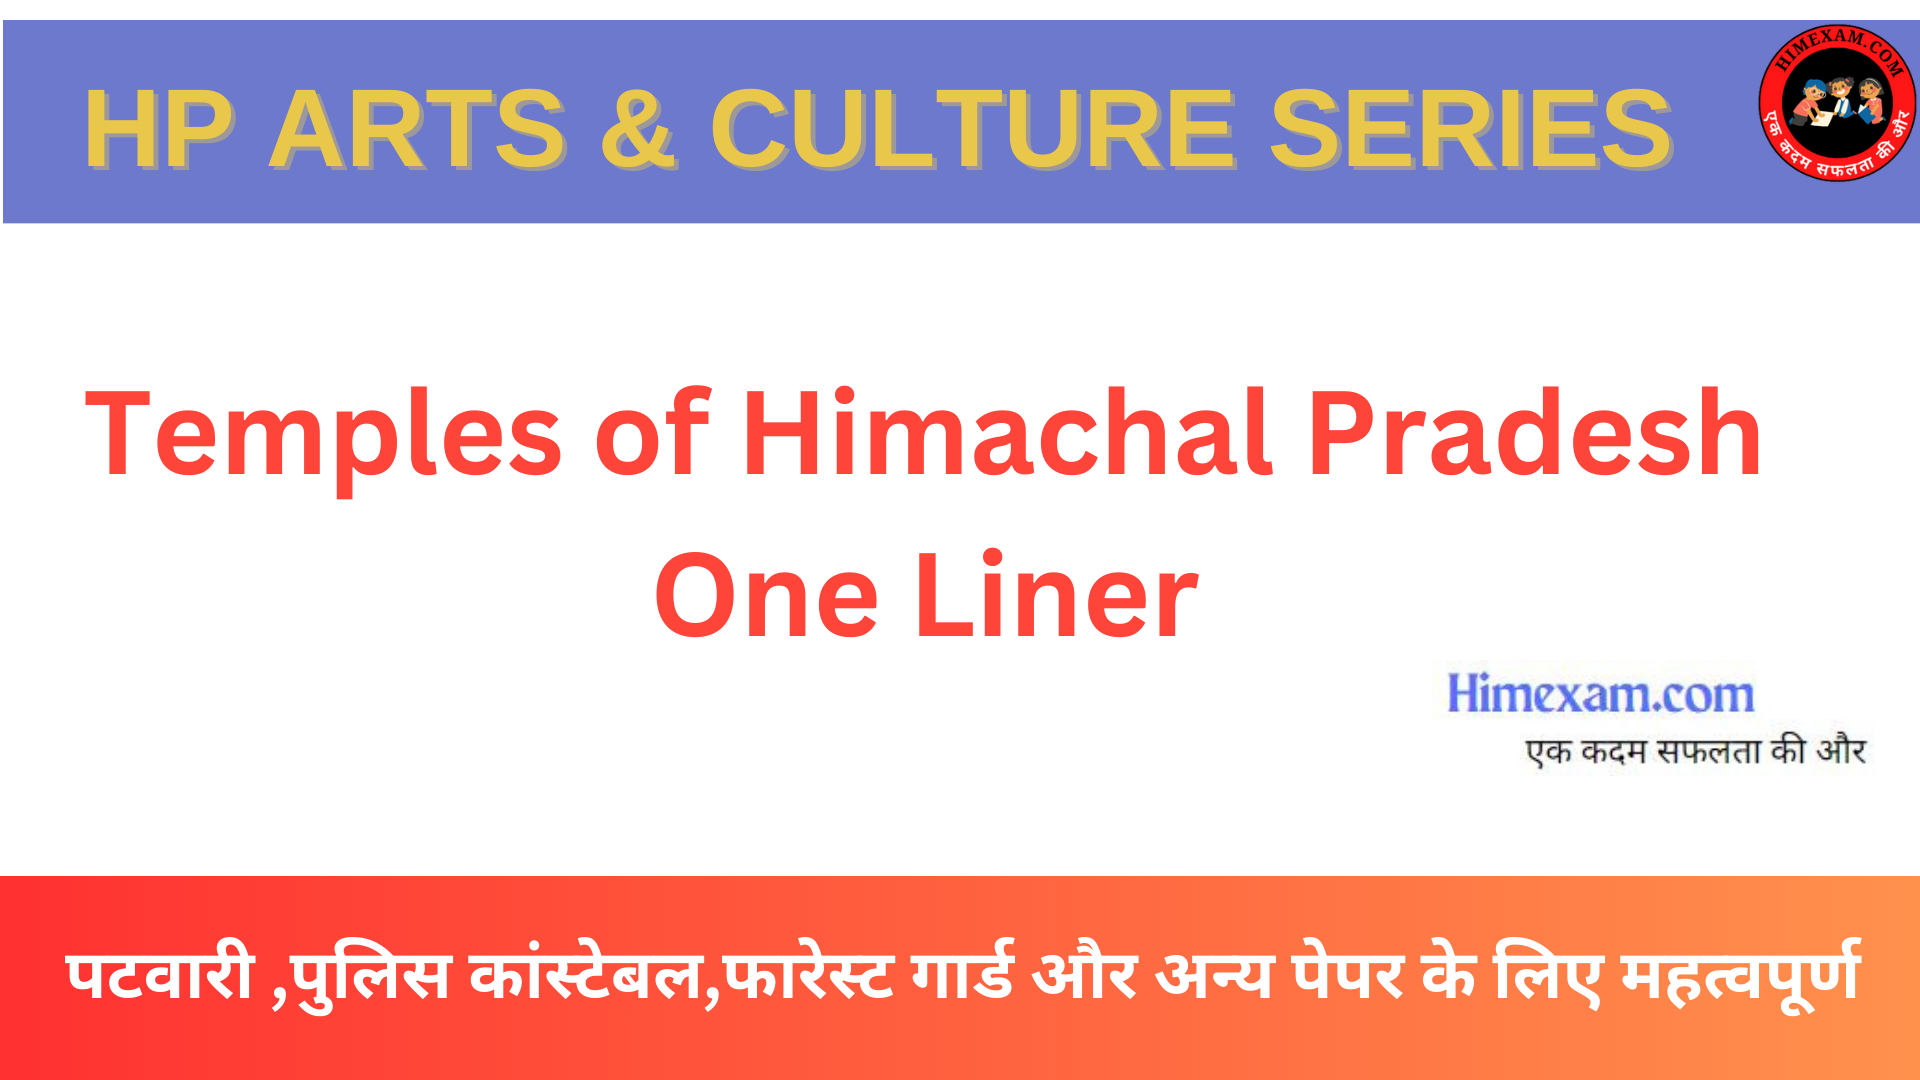 Temples of Himachal Pradesh One Liner